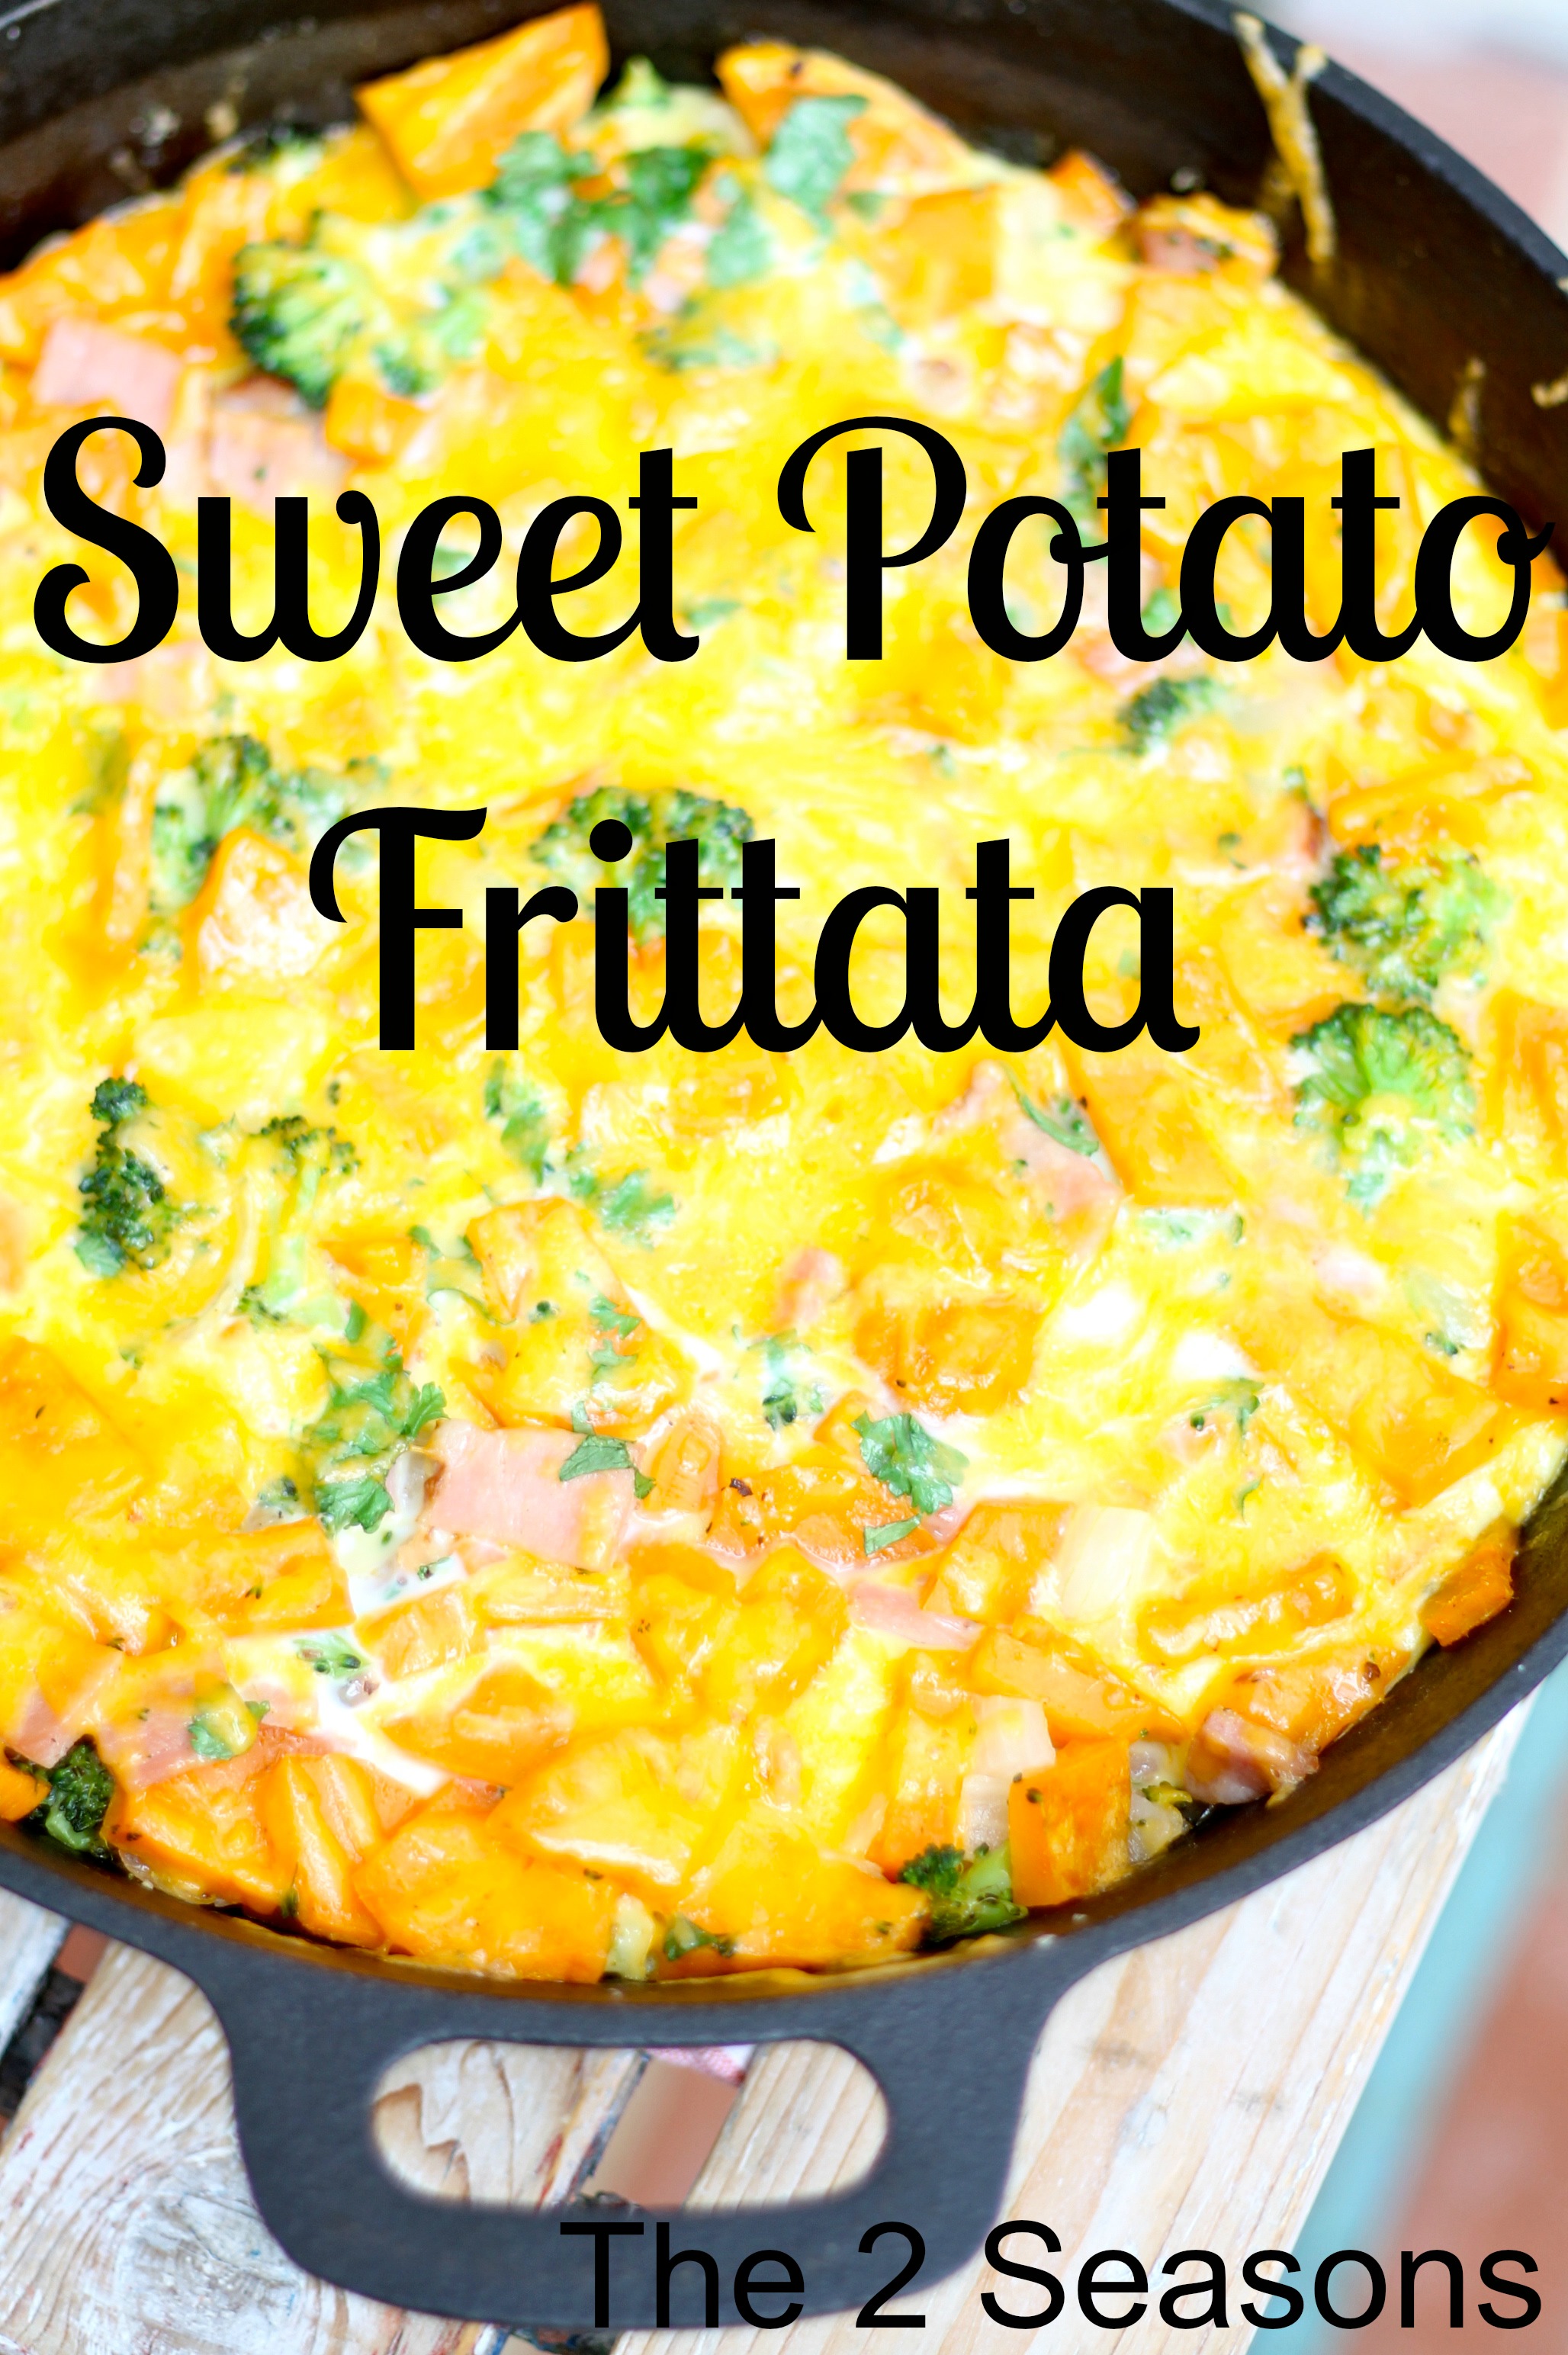 Sweet Potato Frittata - Vegetable Frittata